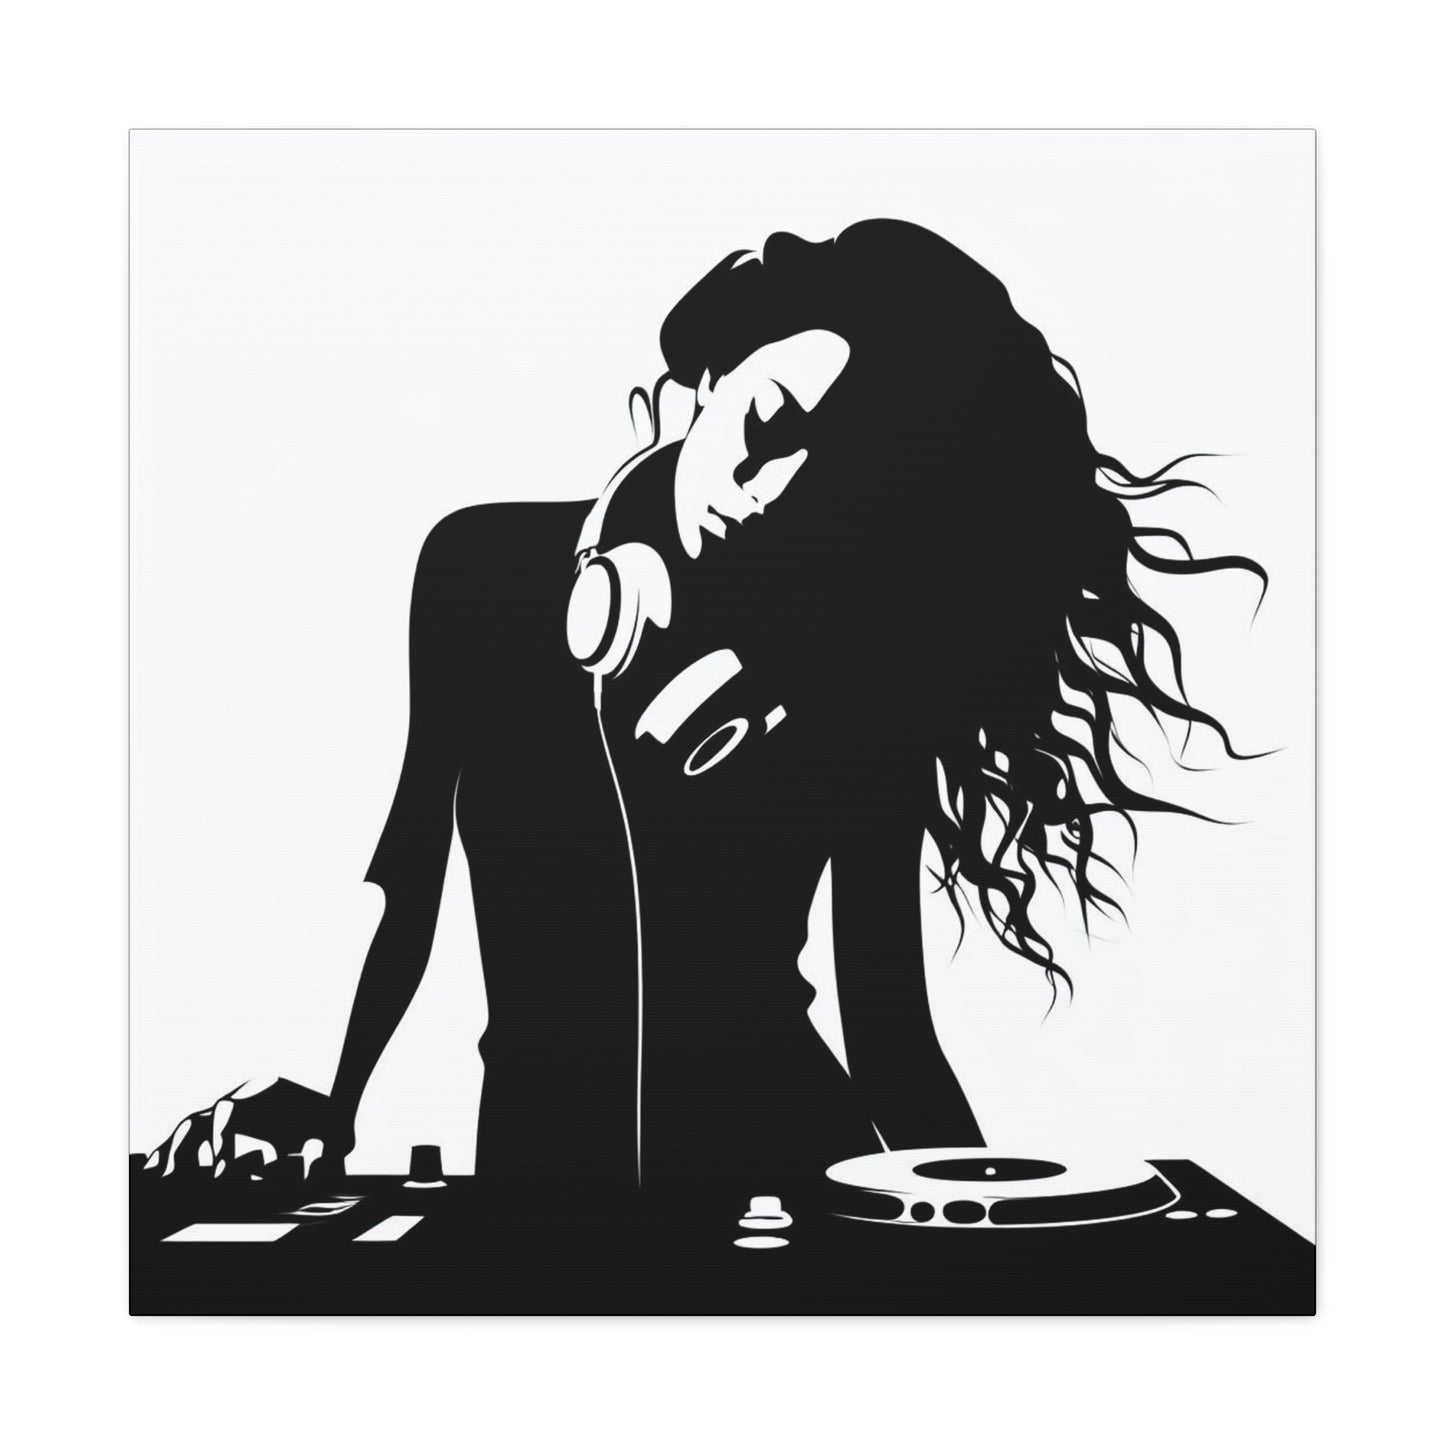 Smoov DJ Girl Canvas Wall Art